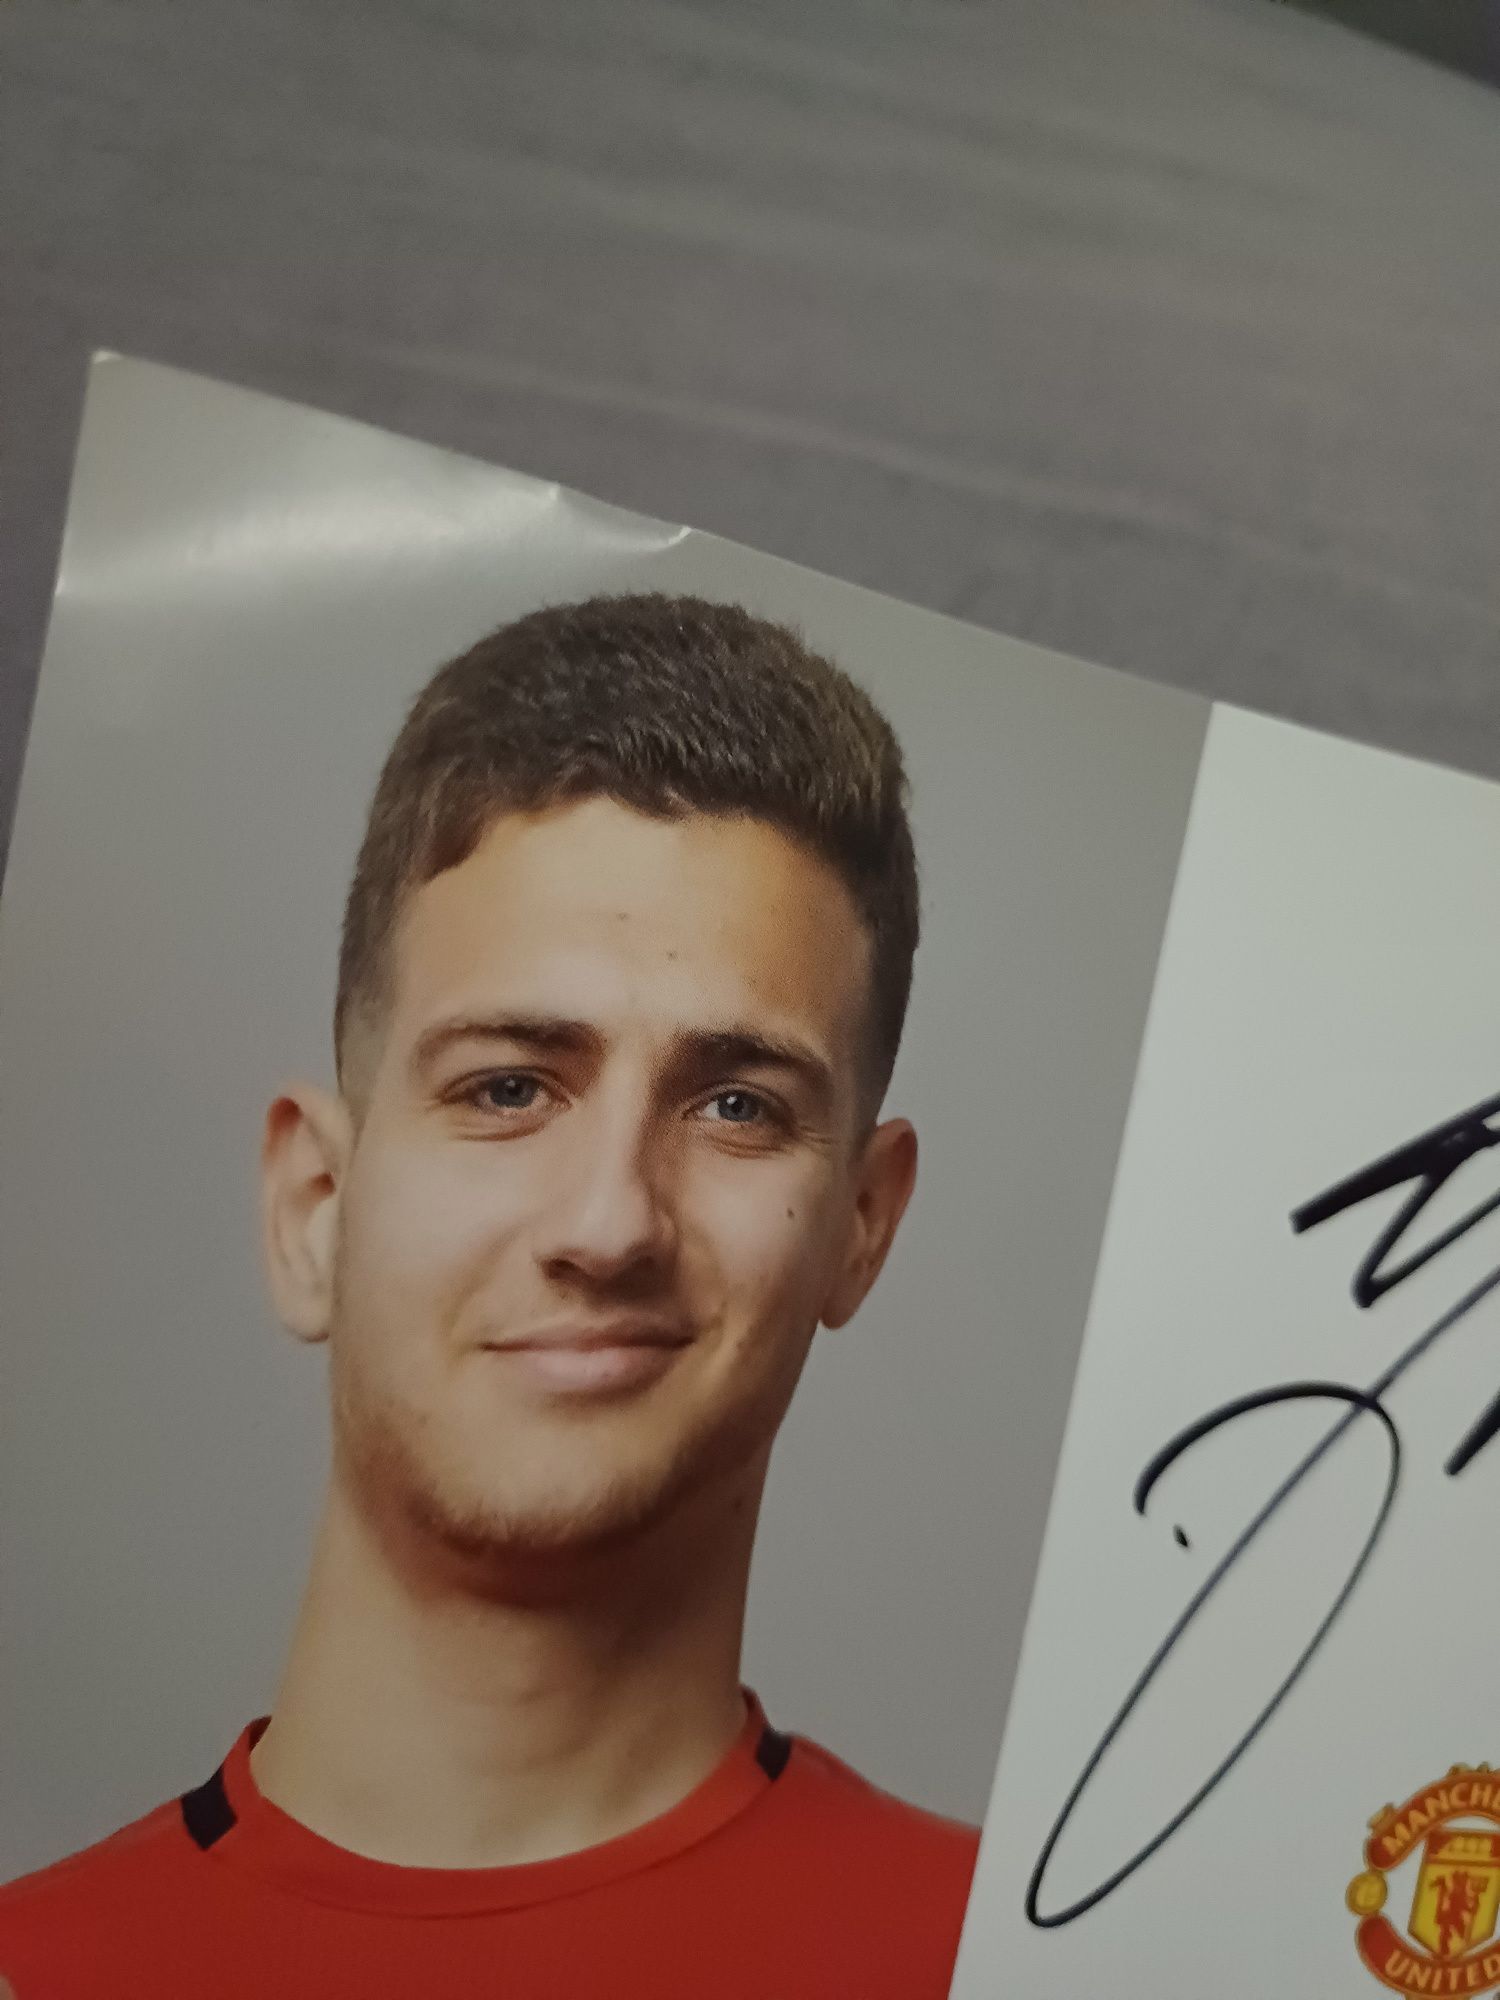 Diogo Dalot Manchester United oryginalny autograf!